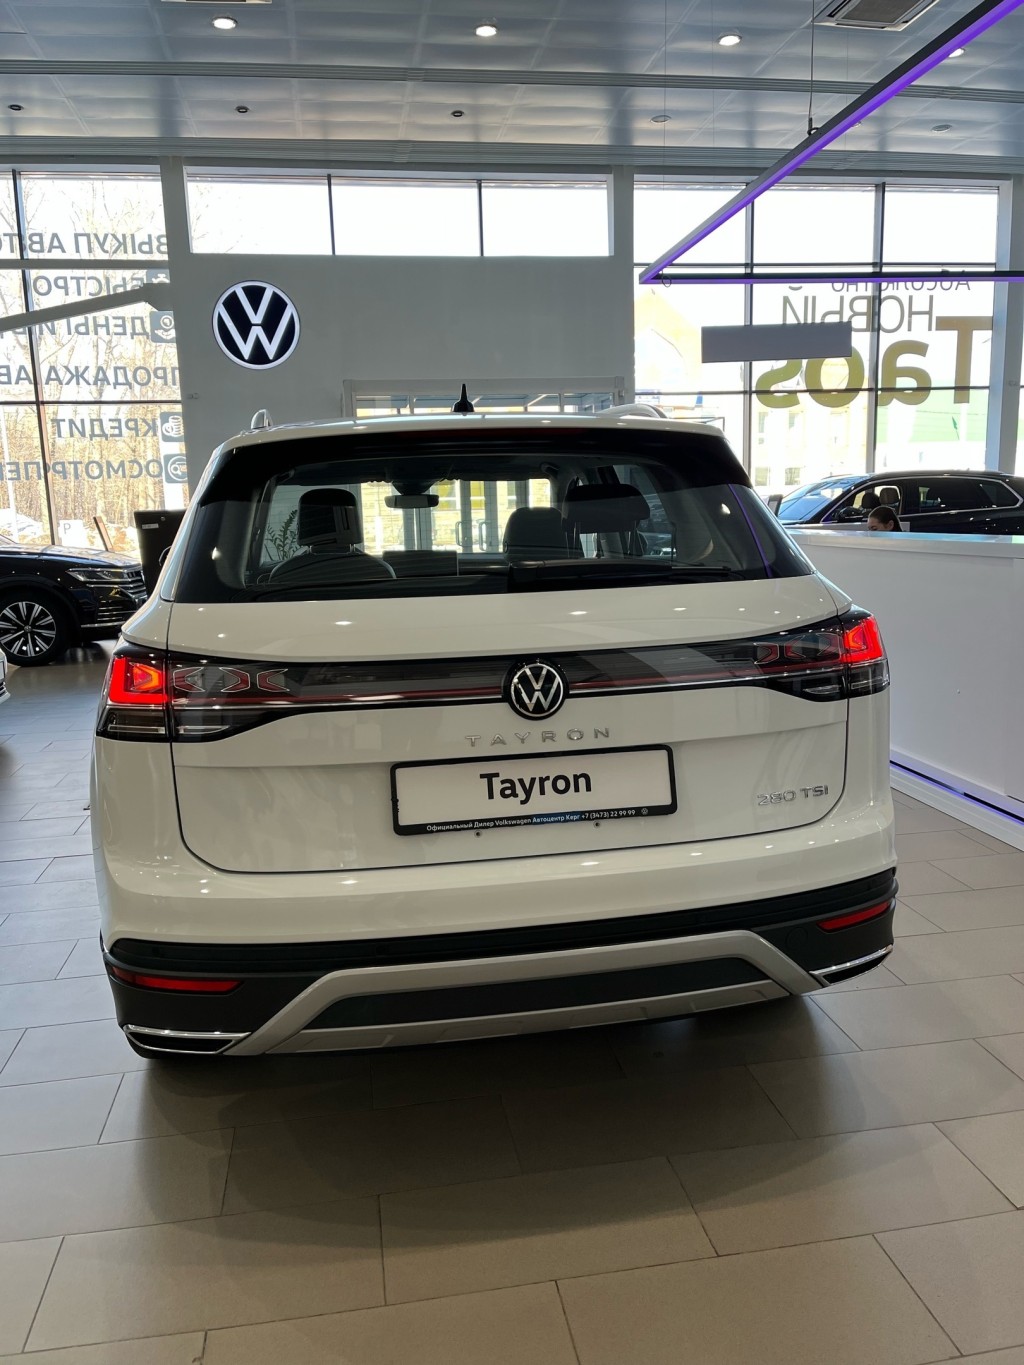 Volkswagen Tayron - вид сзади